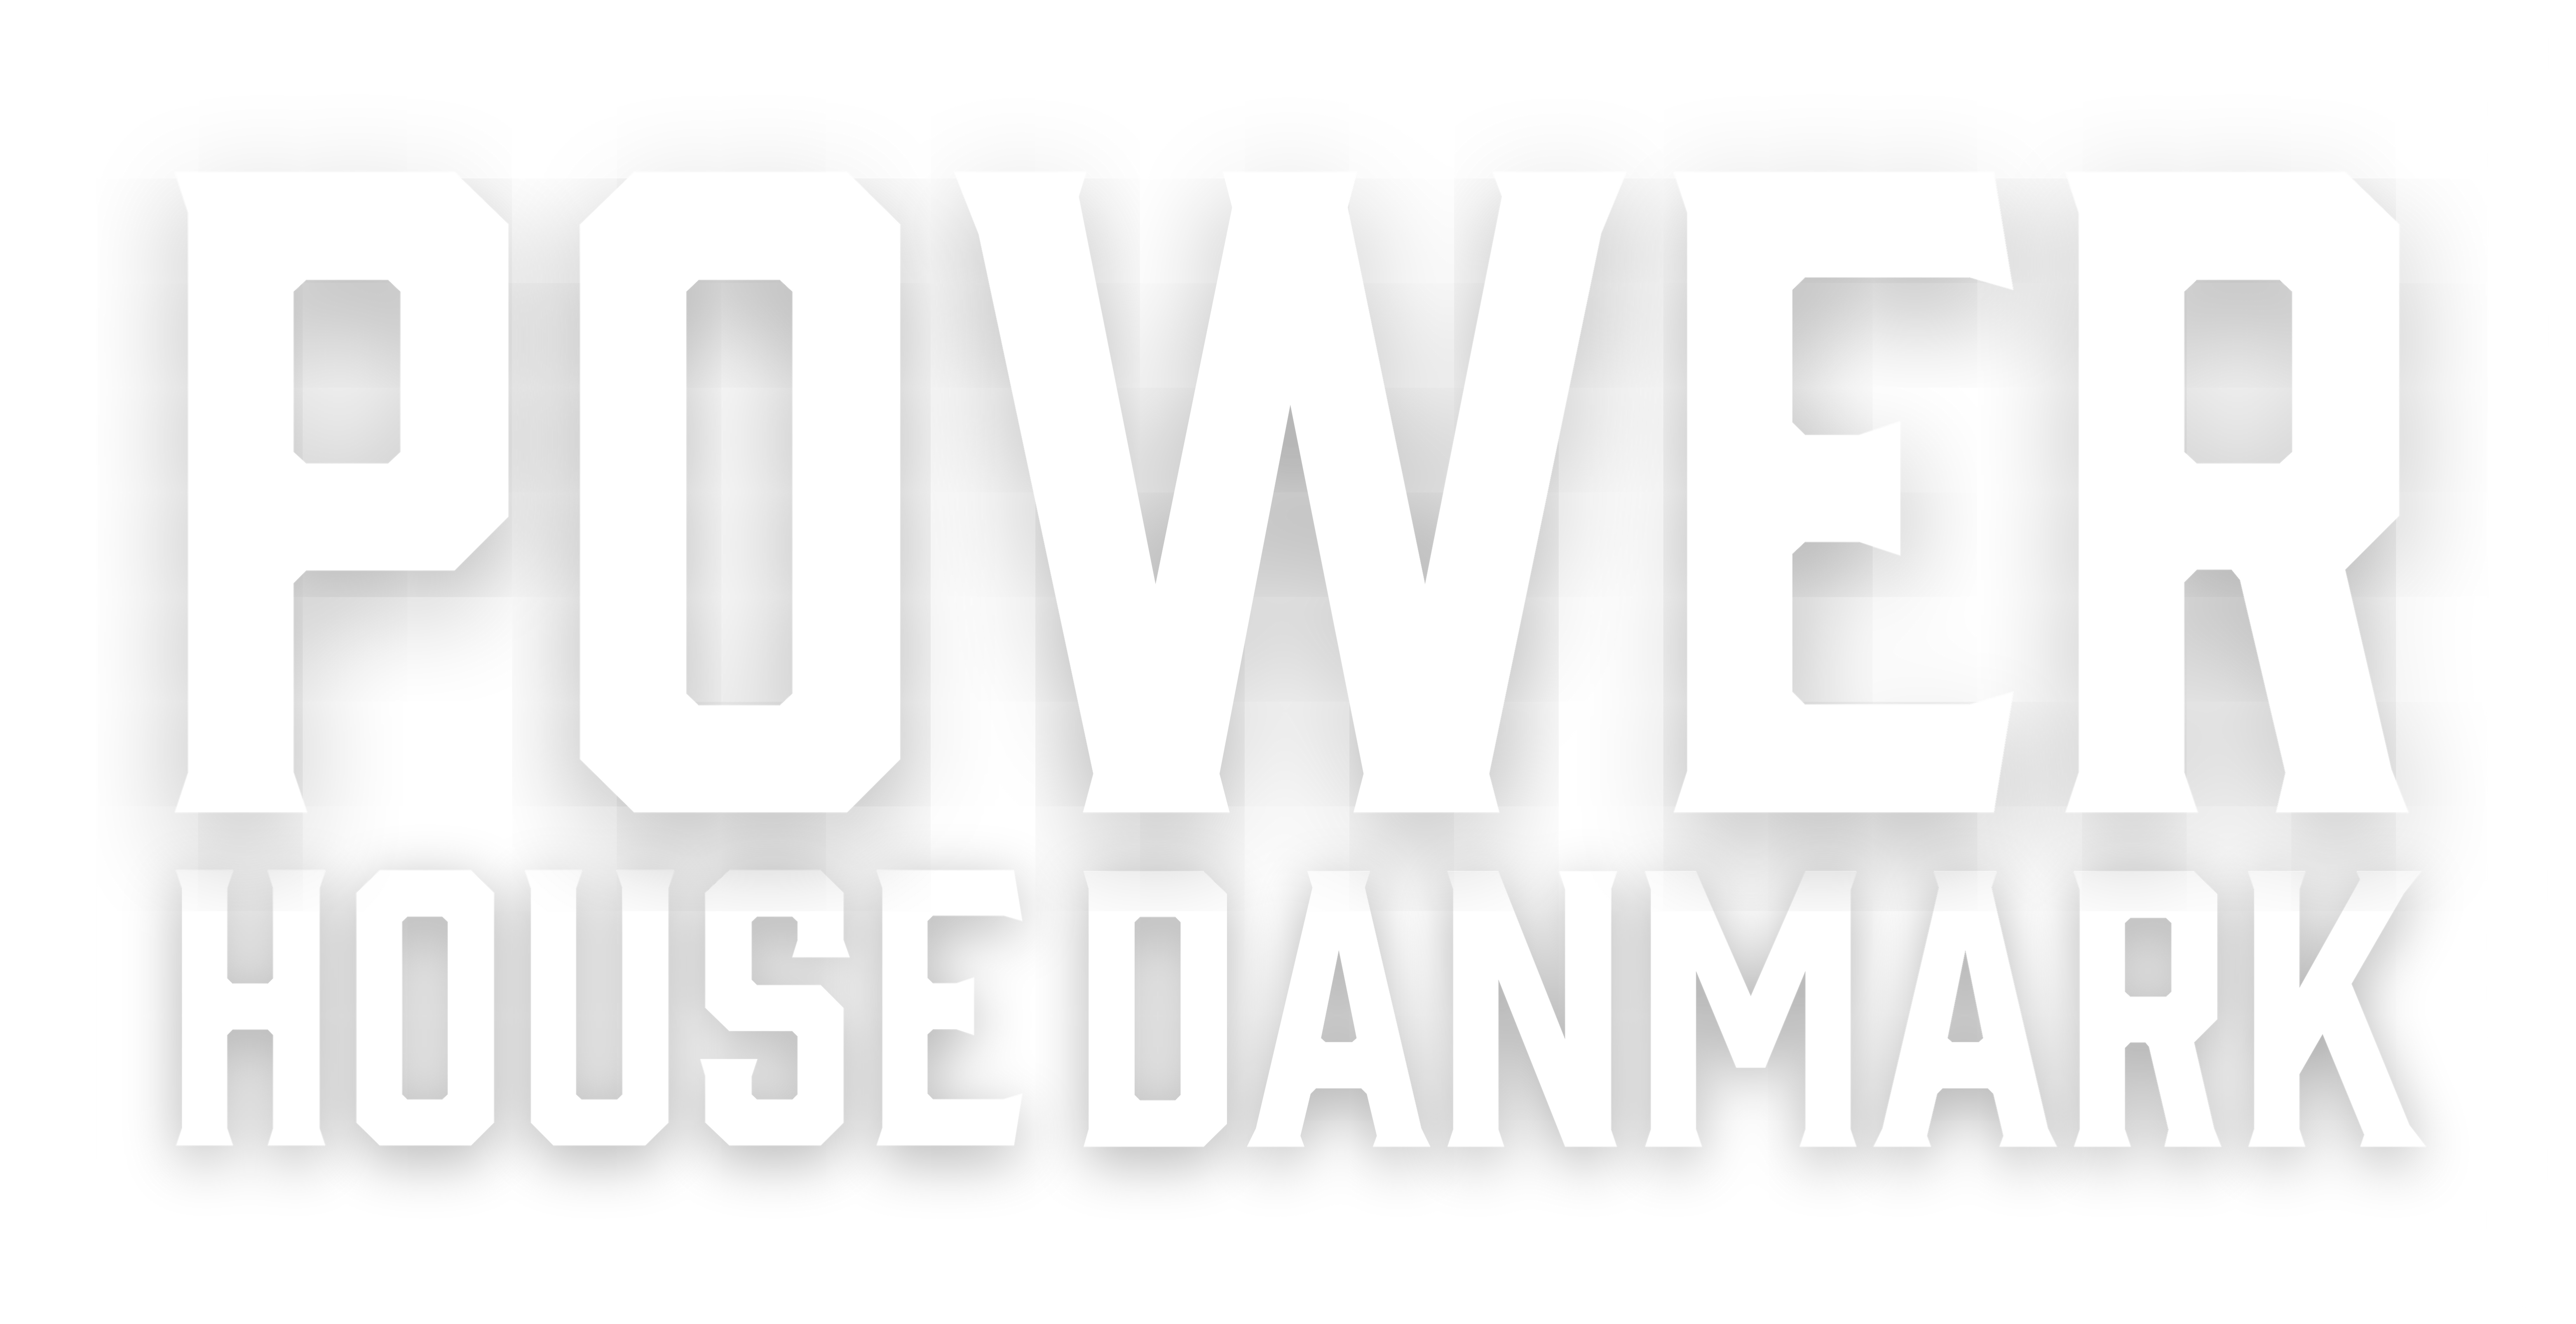 Power House Danmark logo